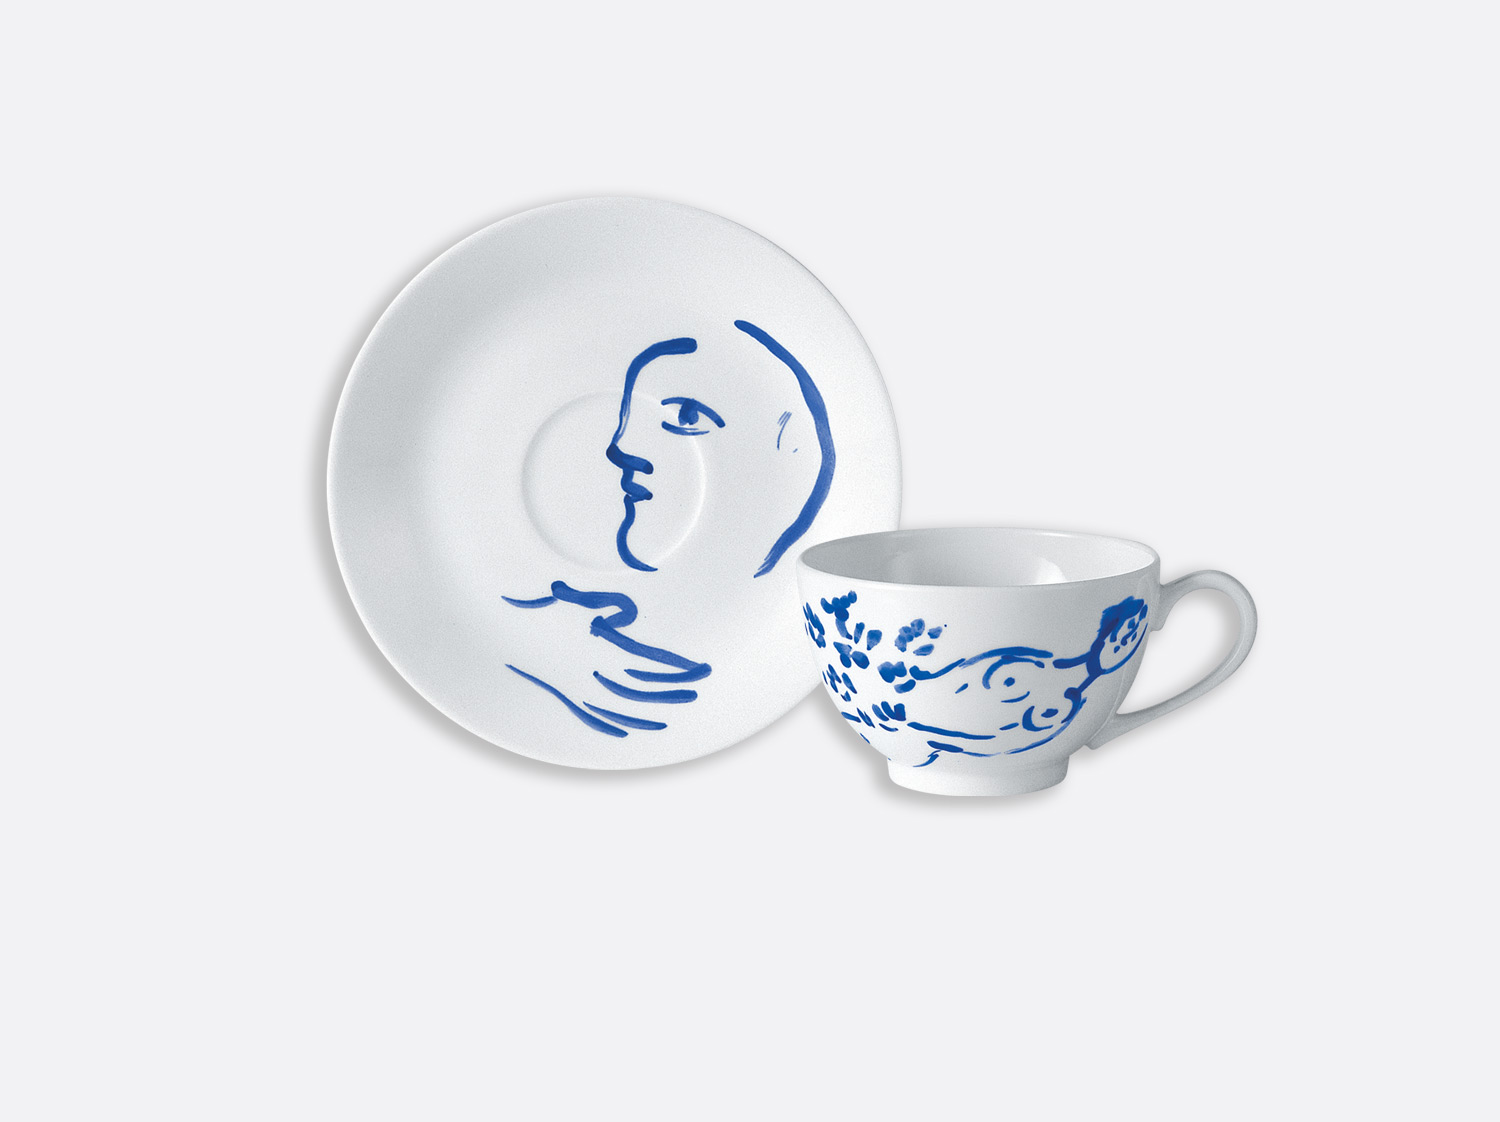 China Tea cup nu allonge of the collection Pour ida | Bernardaud